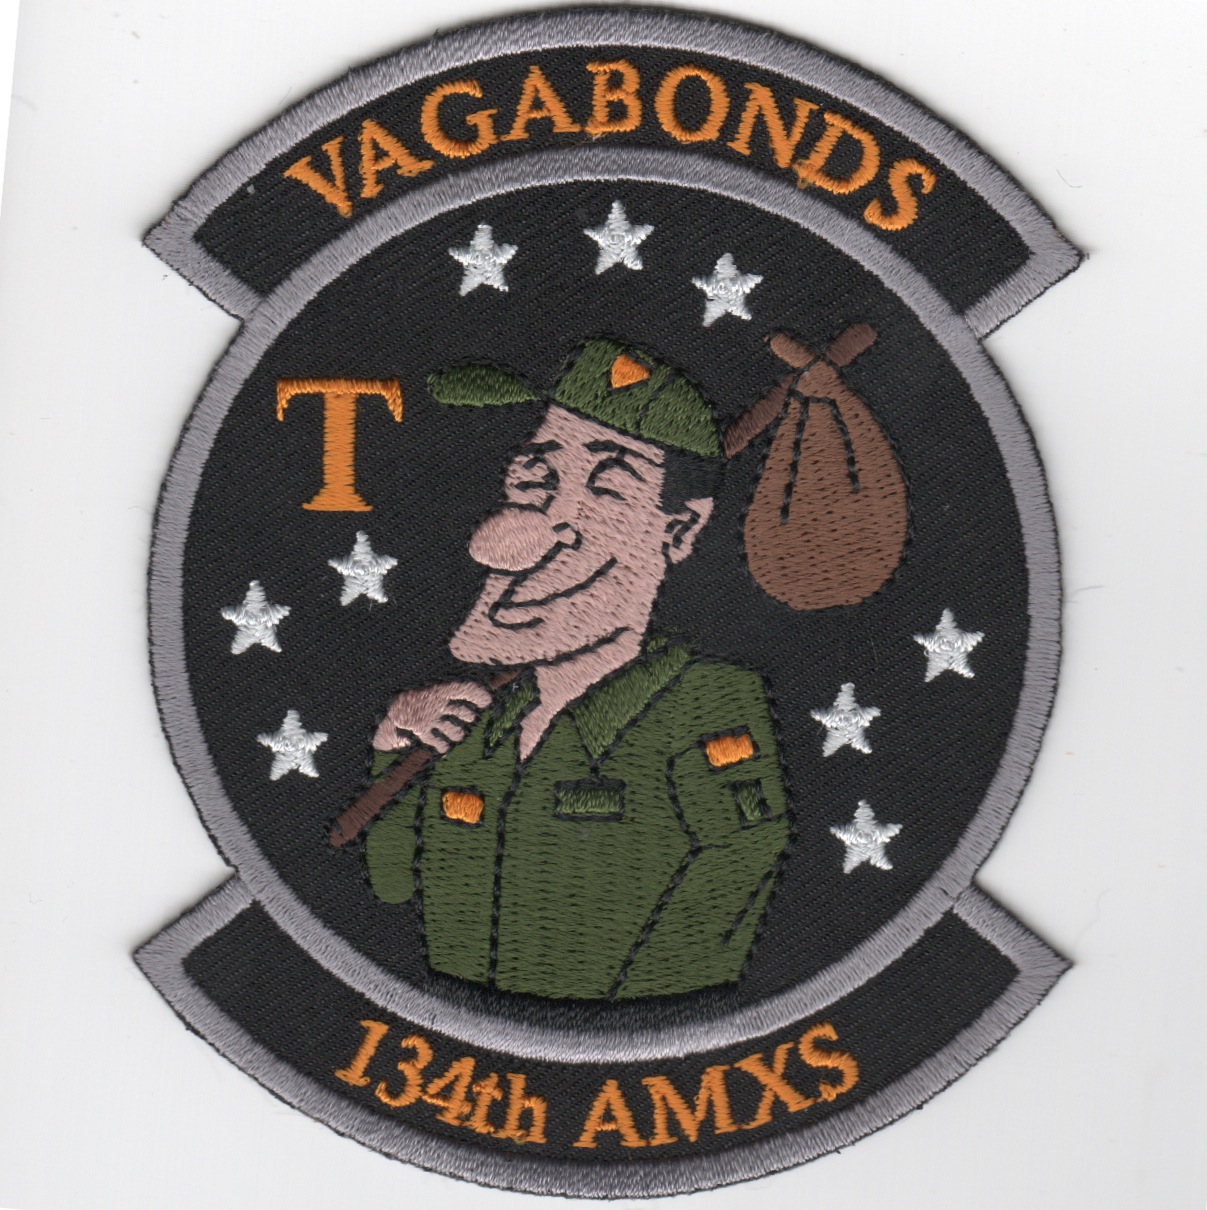 134 AMXS 'Vagabonds' Patch